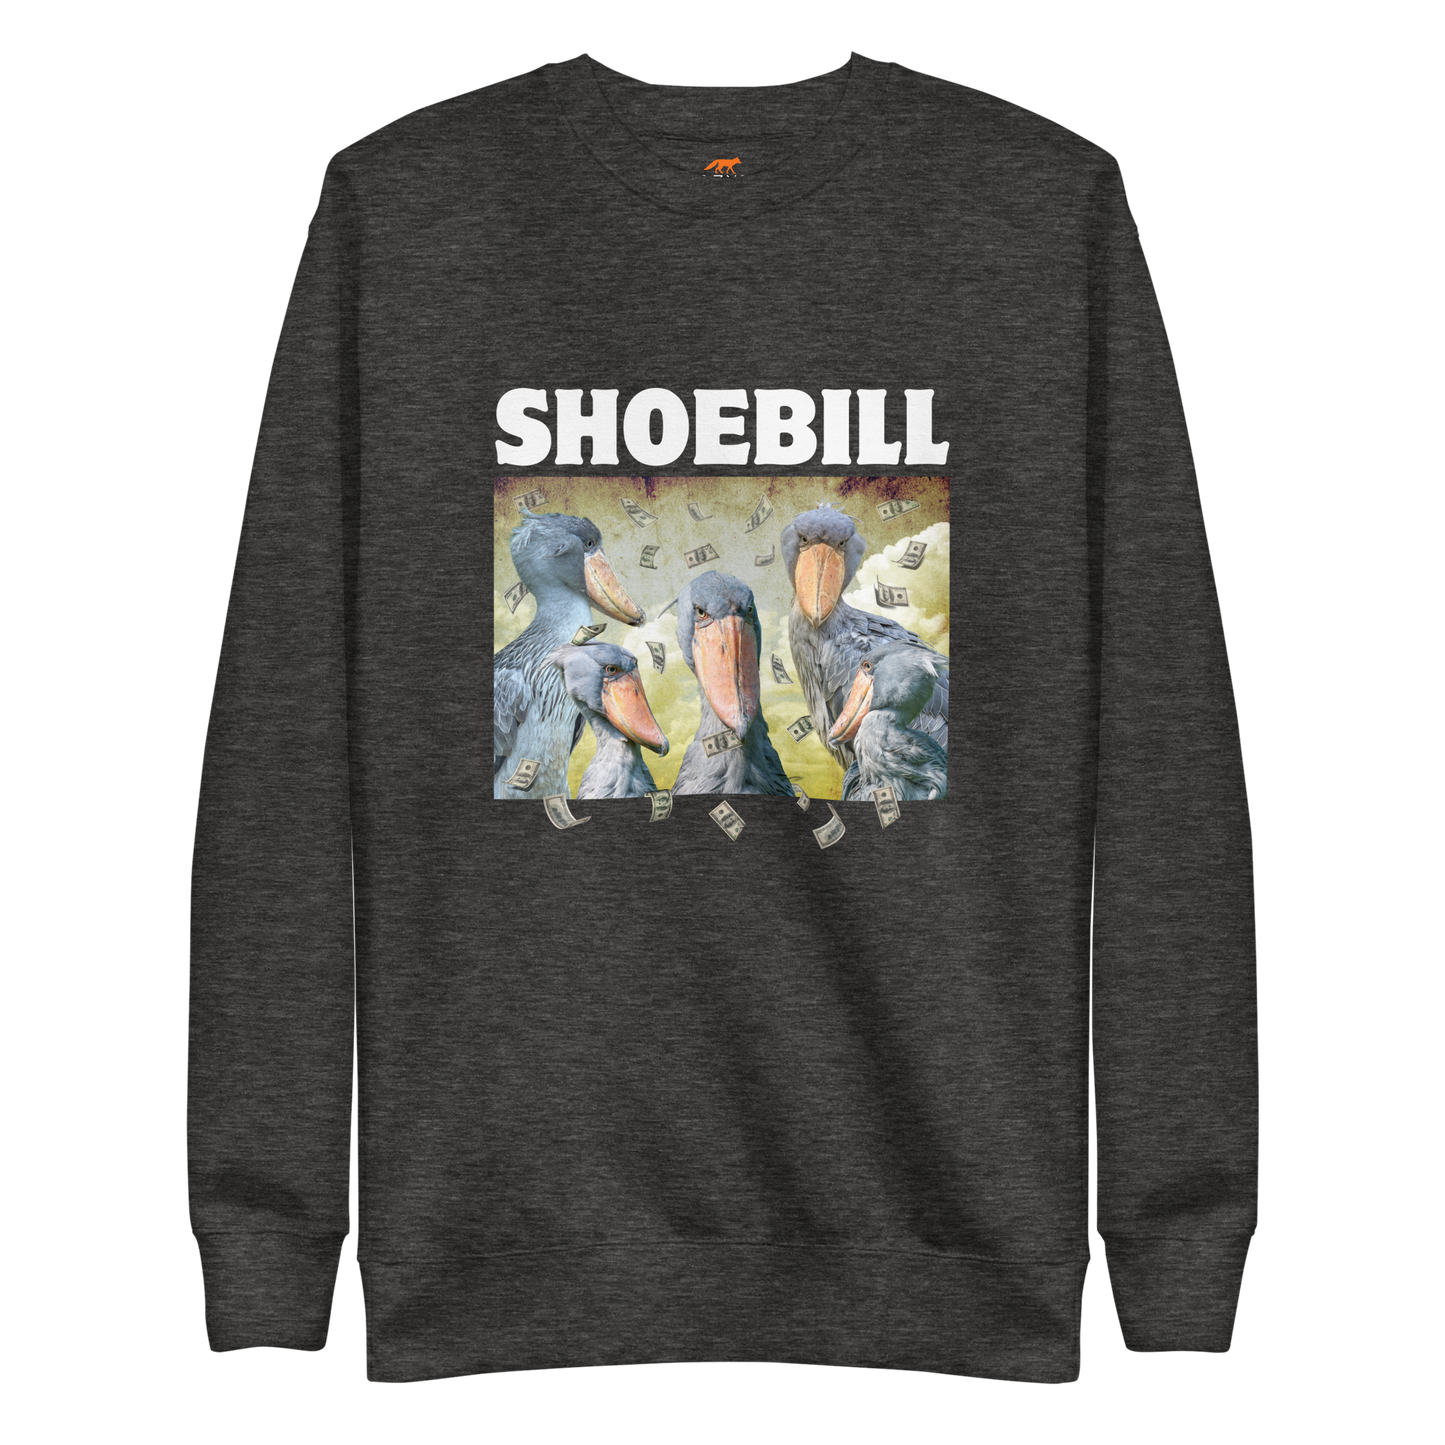 Charcoal Heather Premium Shoebill Sweatshirt featuring a cool Shoebill graphic on the chest - Artsy/Funny Graphic Shoebill Stork Sweatshirts - Boozy Fox